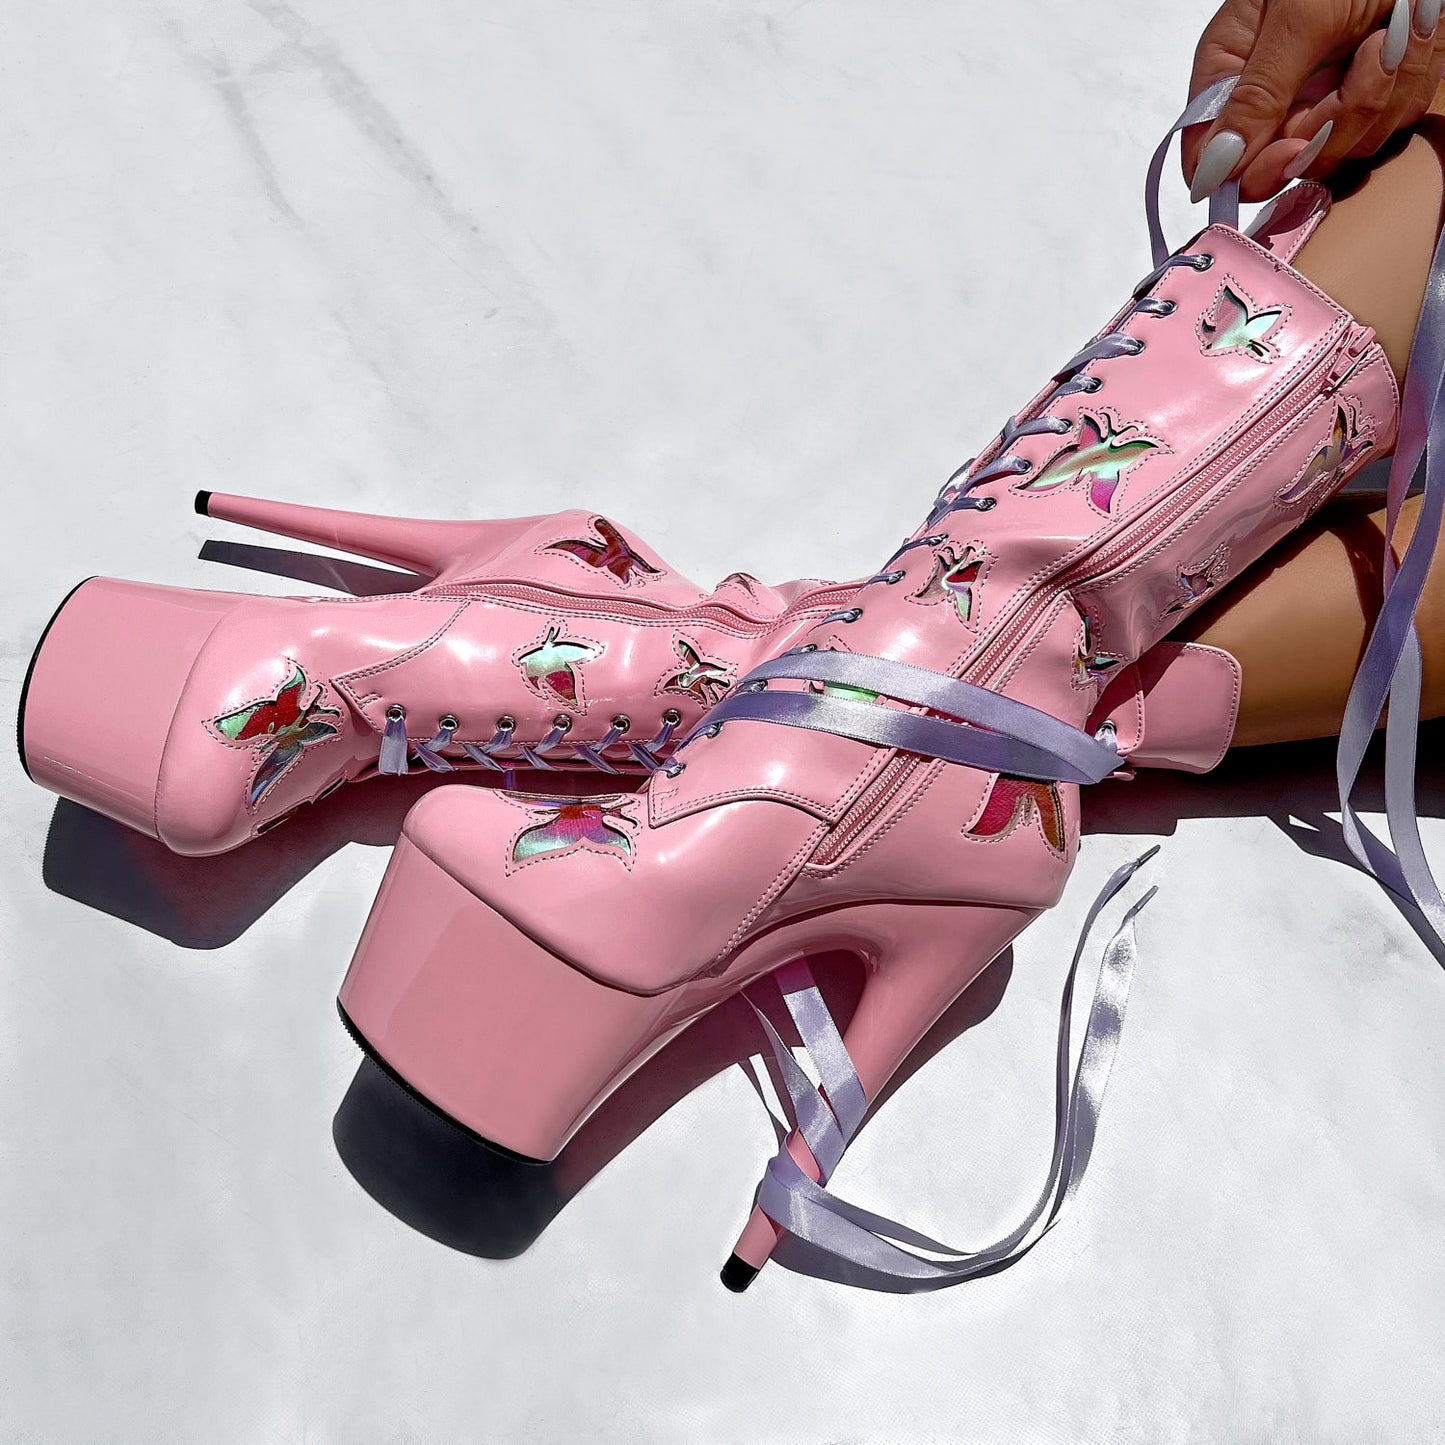 Butterfly Boot - Pink - 8 INCH, stripper shoe, stripper heel, pole heel, not a pleaser, platform, dancer, pole dance, floor work